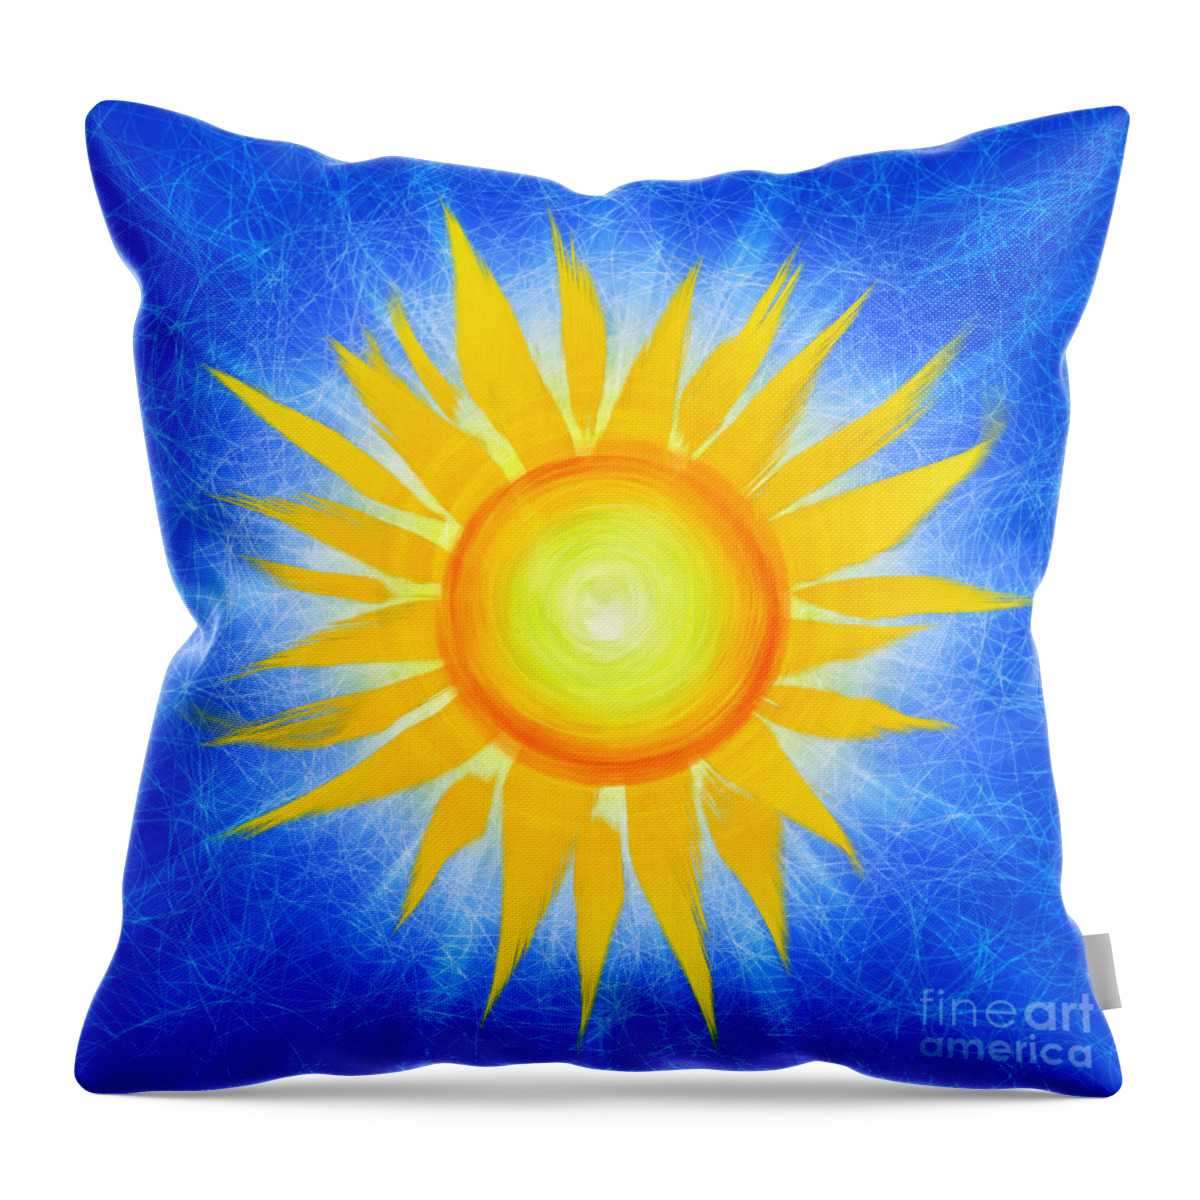 Sun Flower Throw Pillow featuring the photograph Sun Flower by Tim Gainey